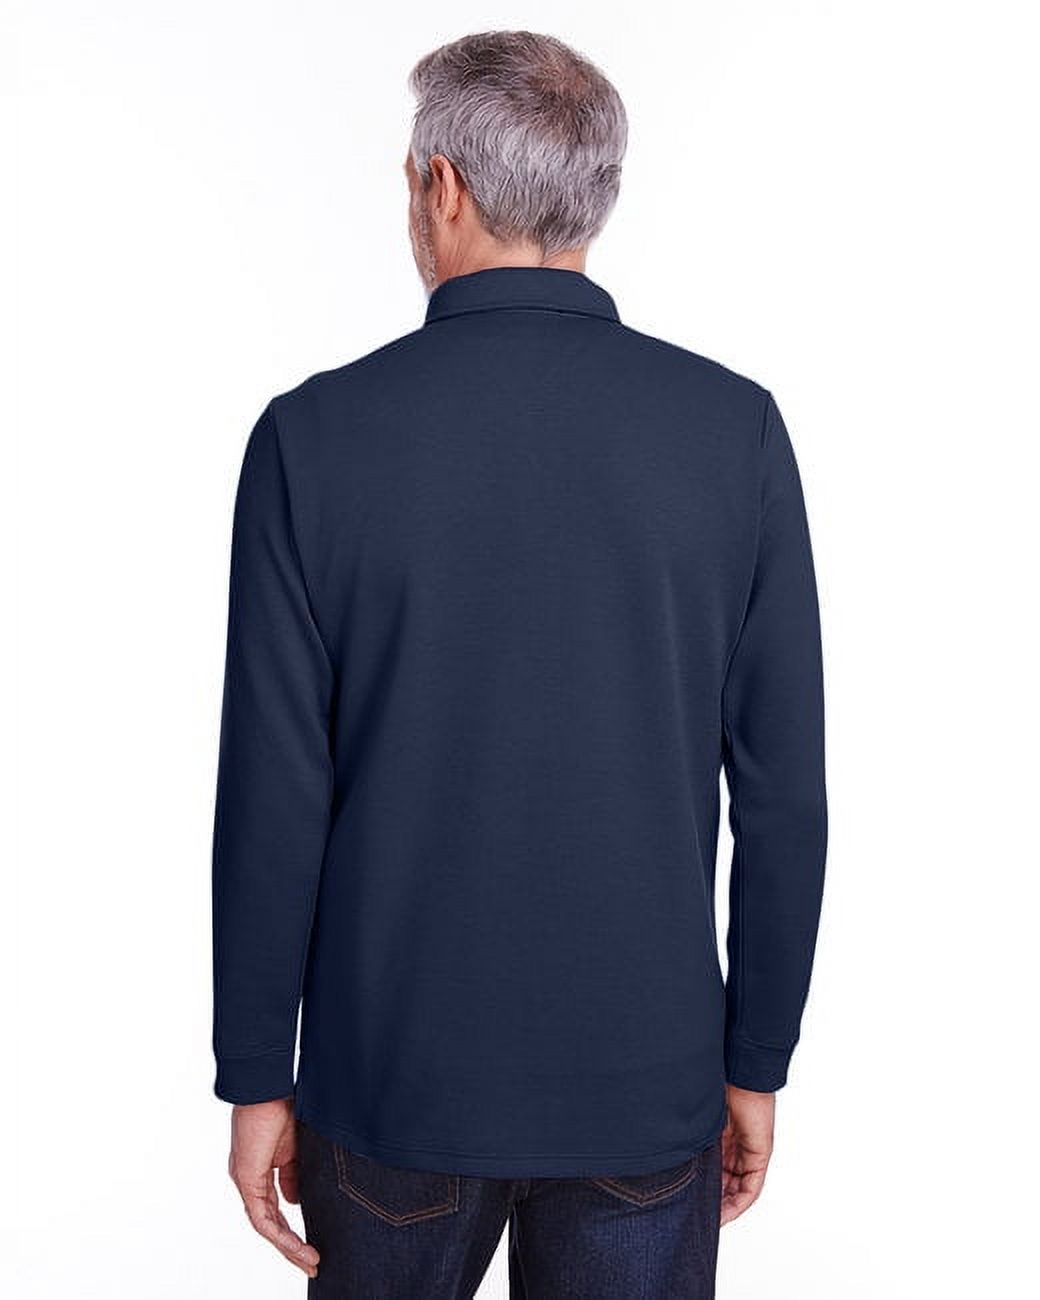 Adult StainBloc™ Pique Fleece Pullover Jacket - DARK NAVY - M - image 2 of 2